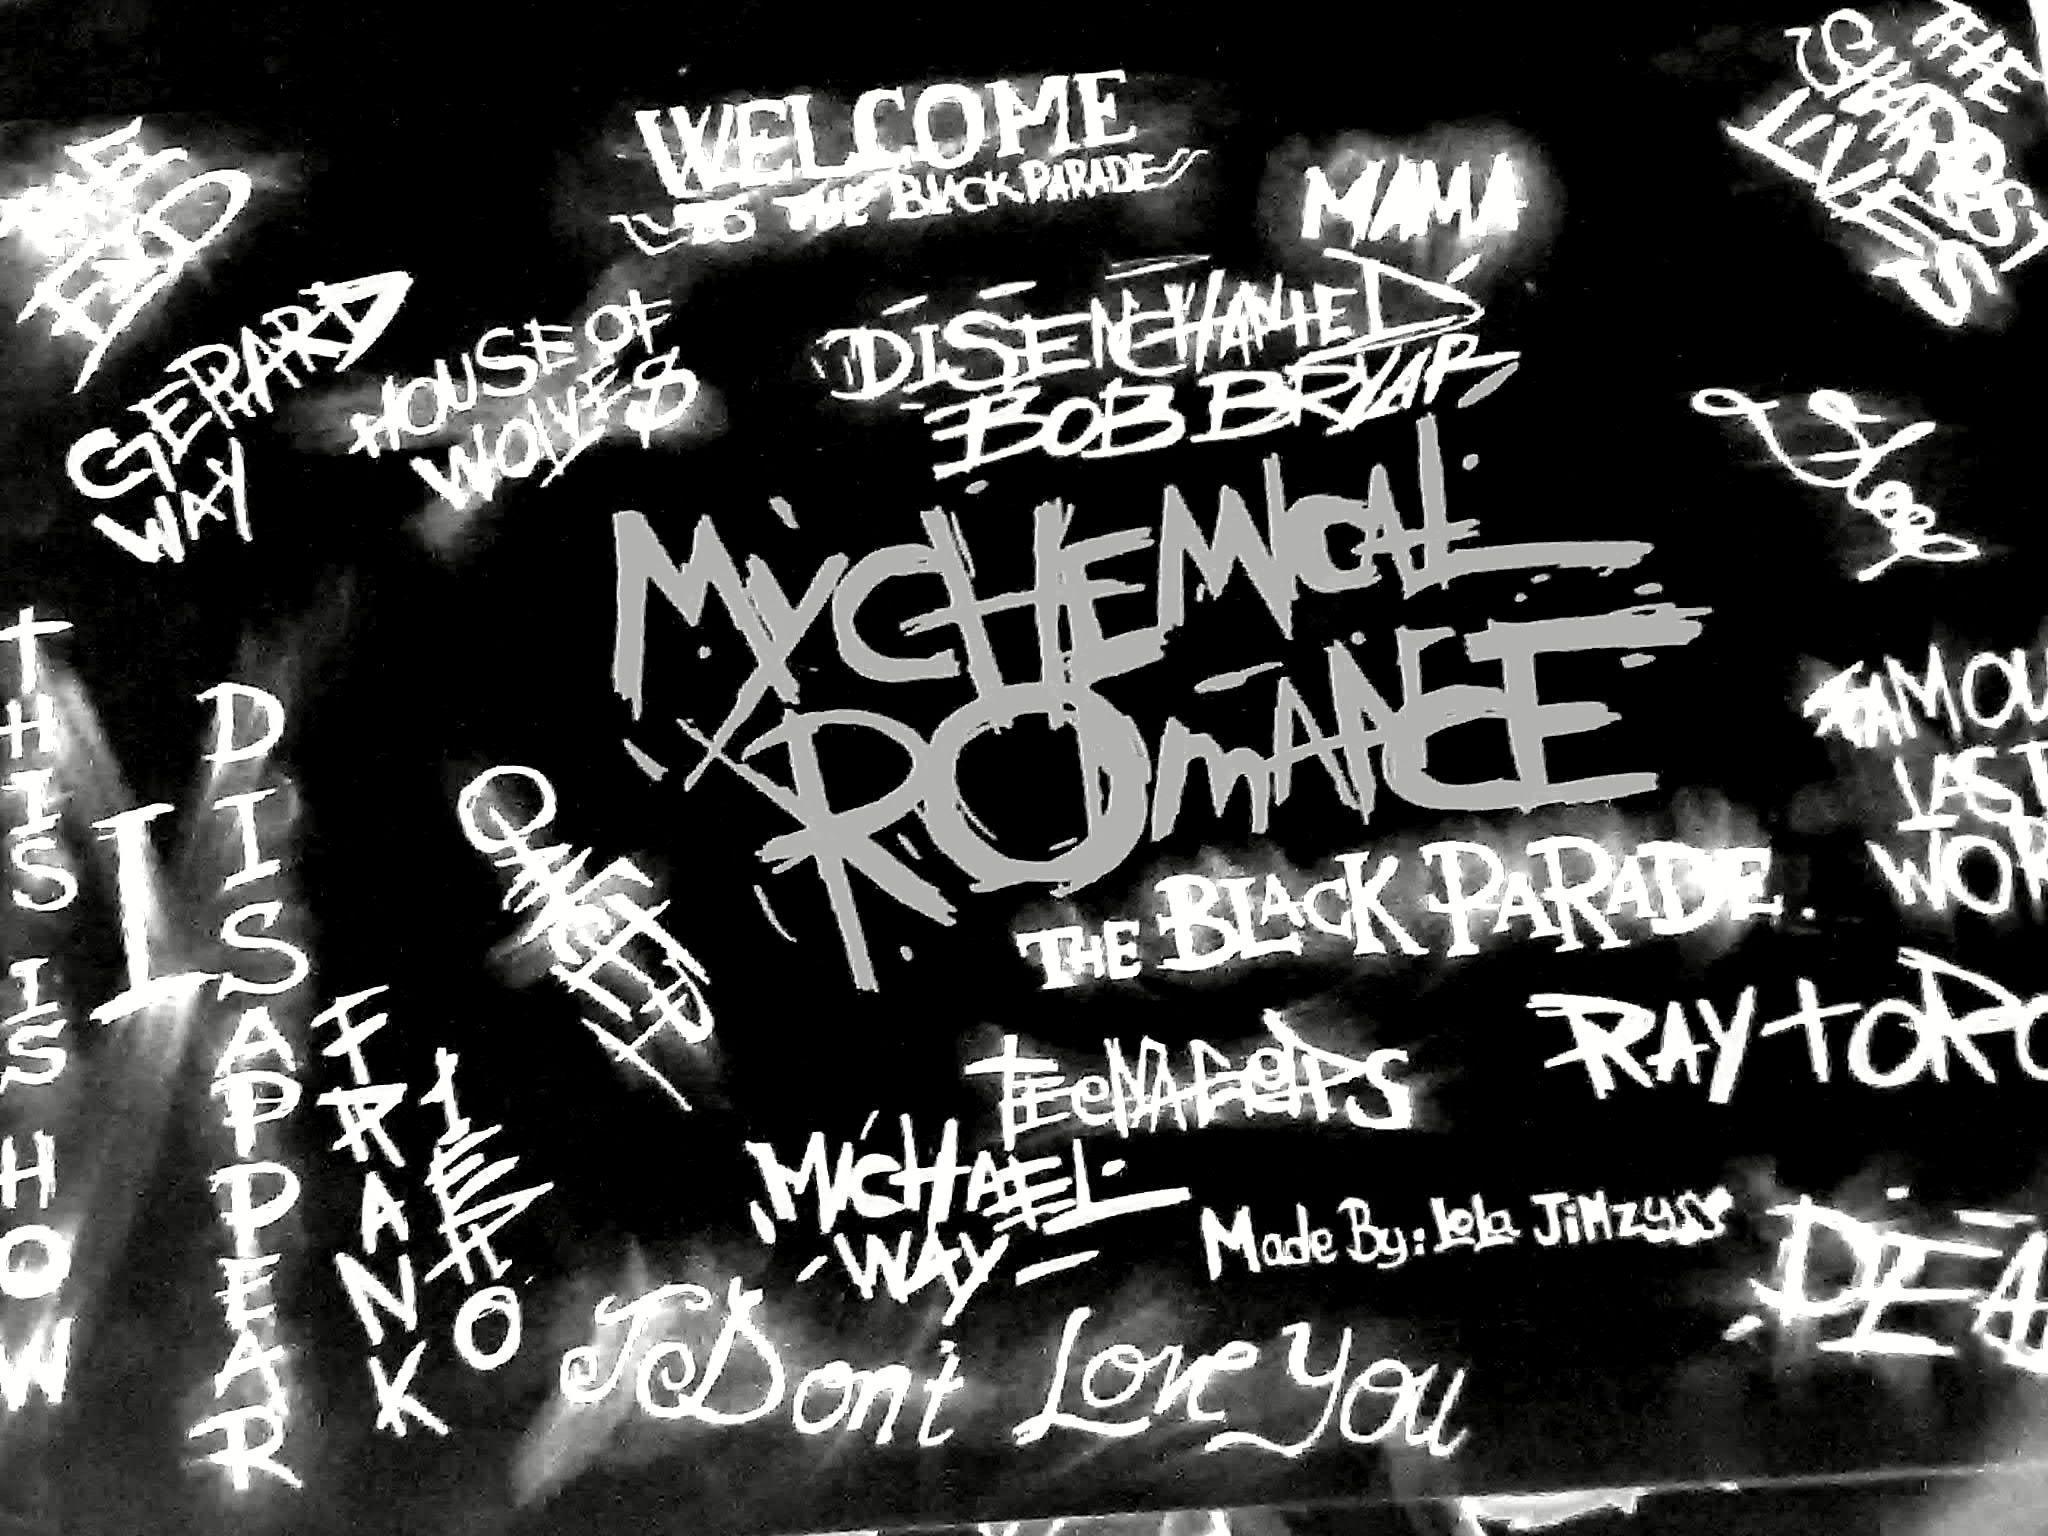 HD My Chemical Romance Wallpaper